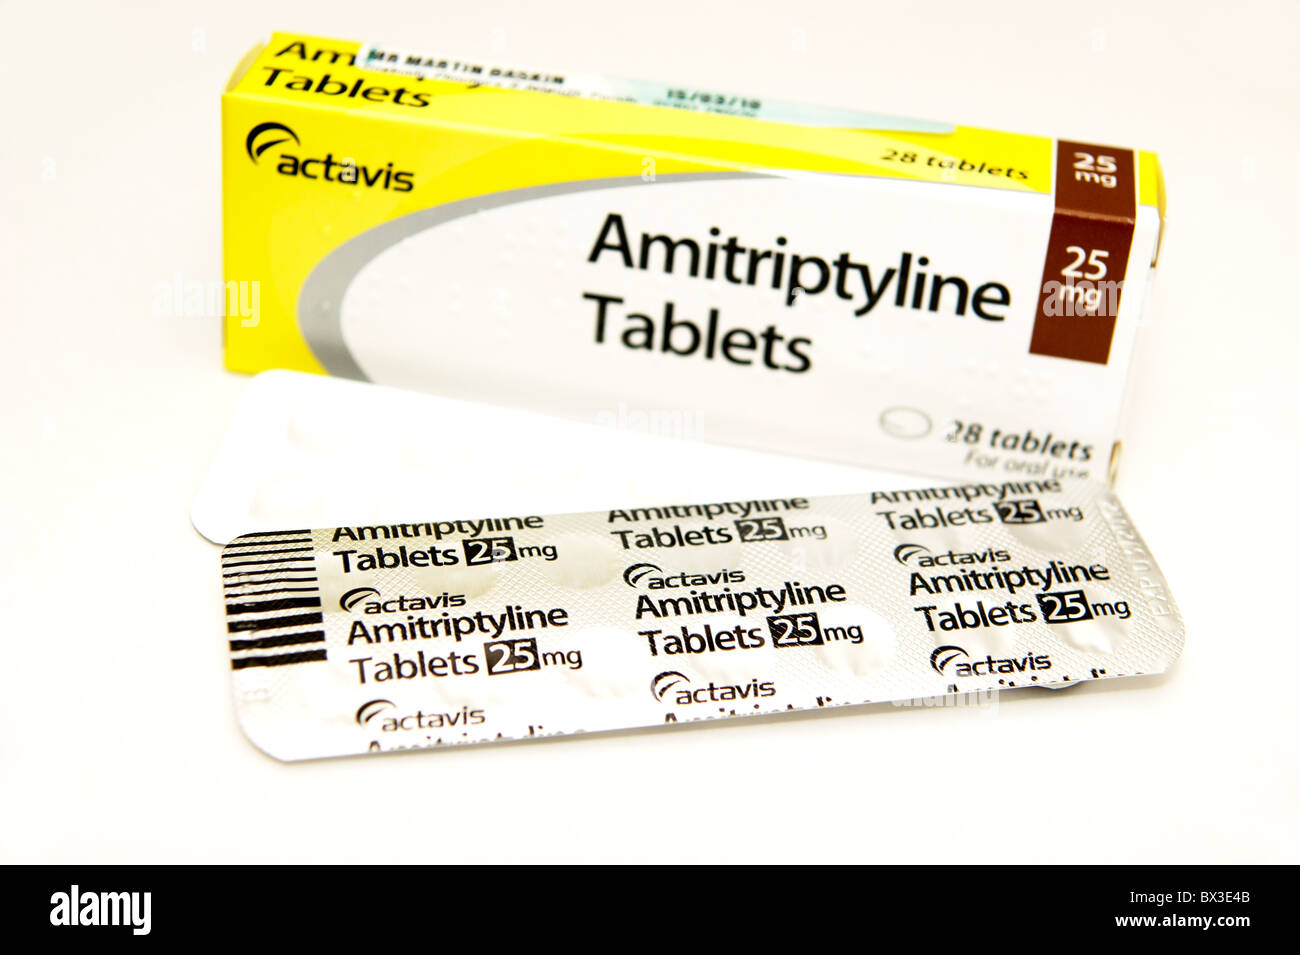 amitriptyline tablets for depression & depressive disorders Stock Photo